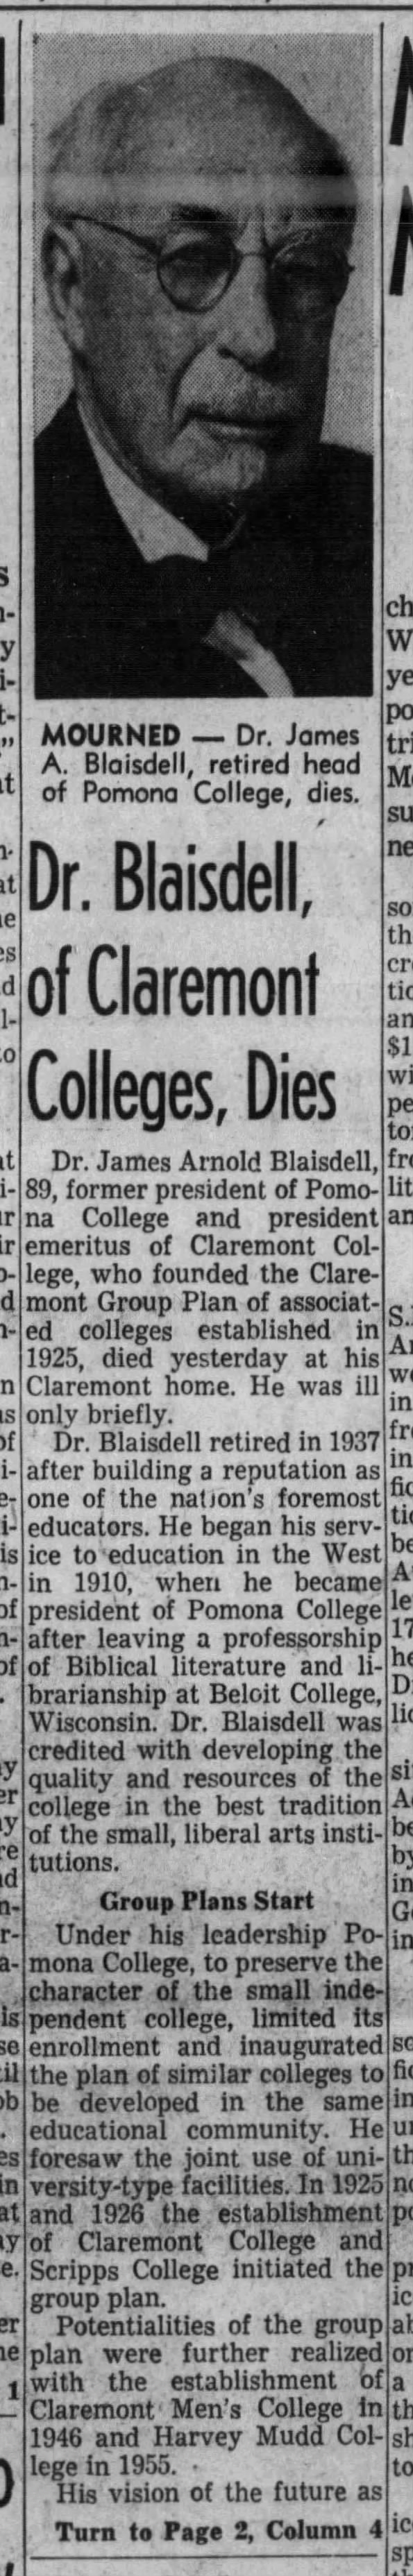 Dr. Blaisdell, of Claremont Colleges, Dies